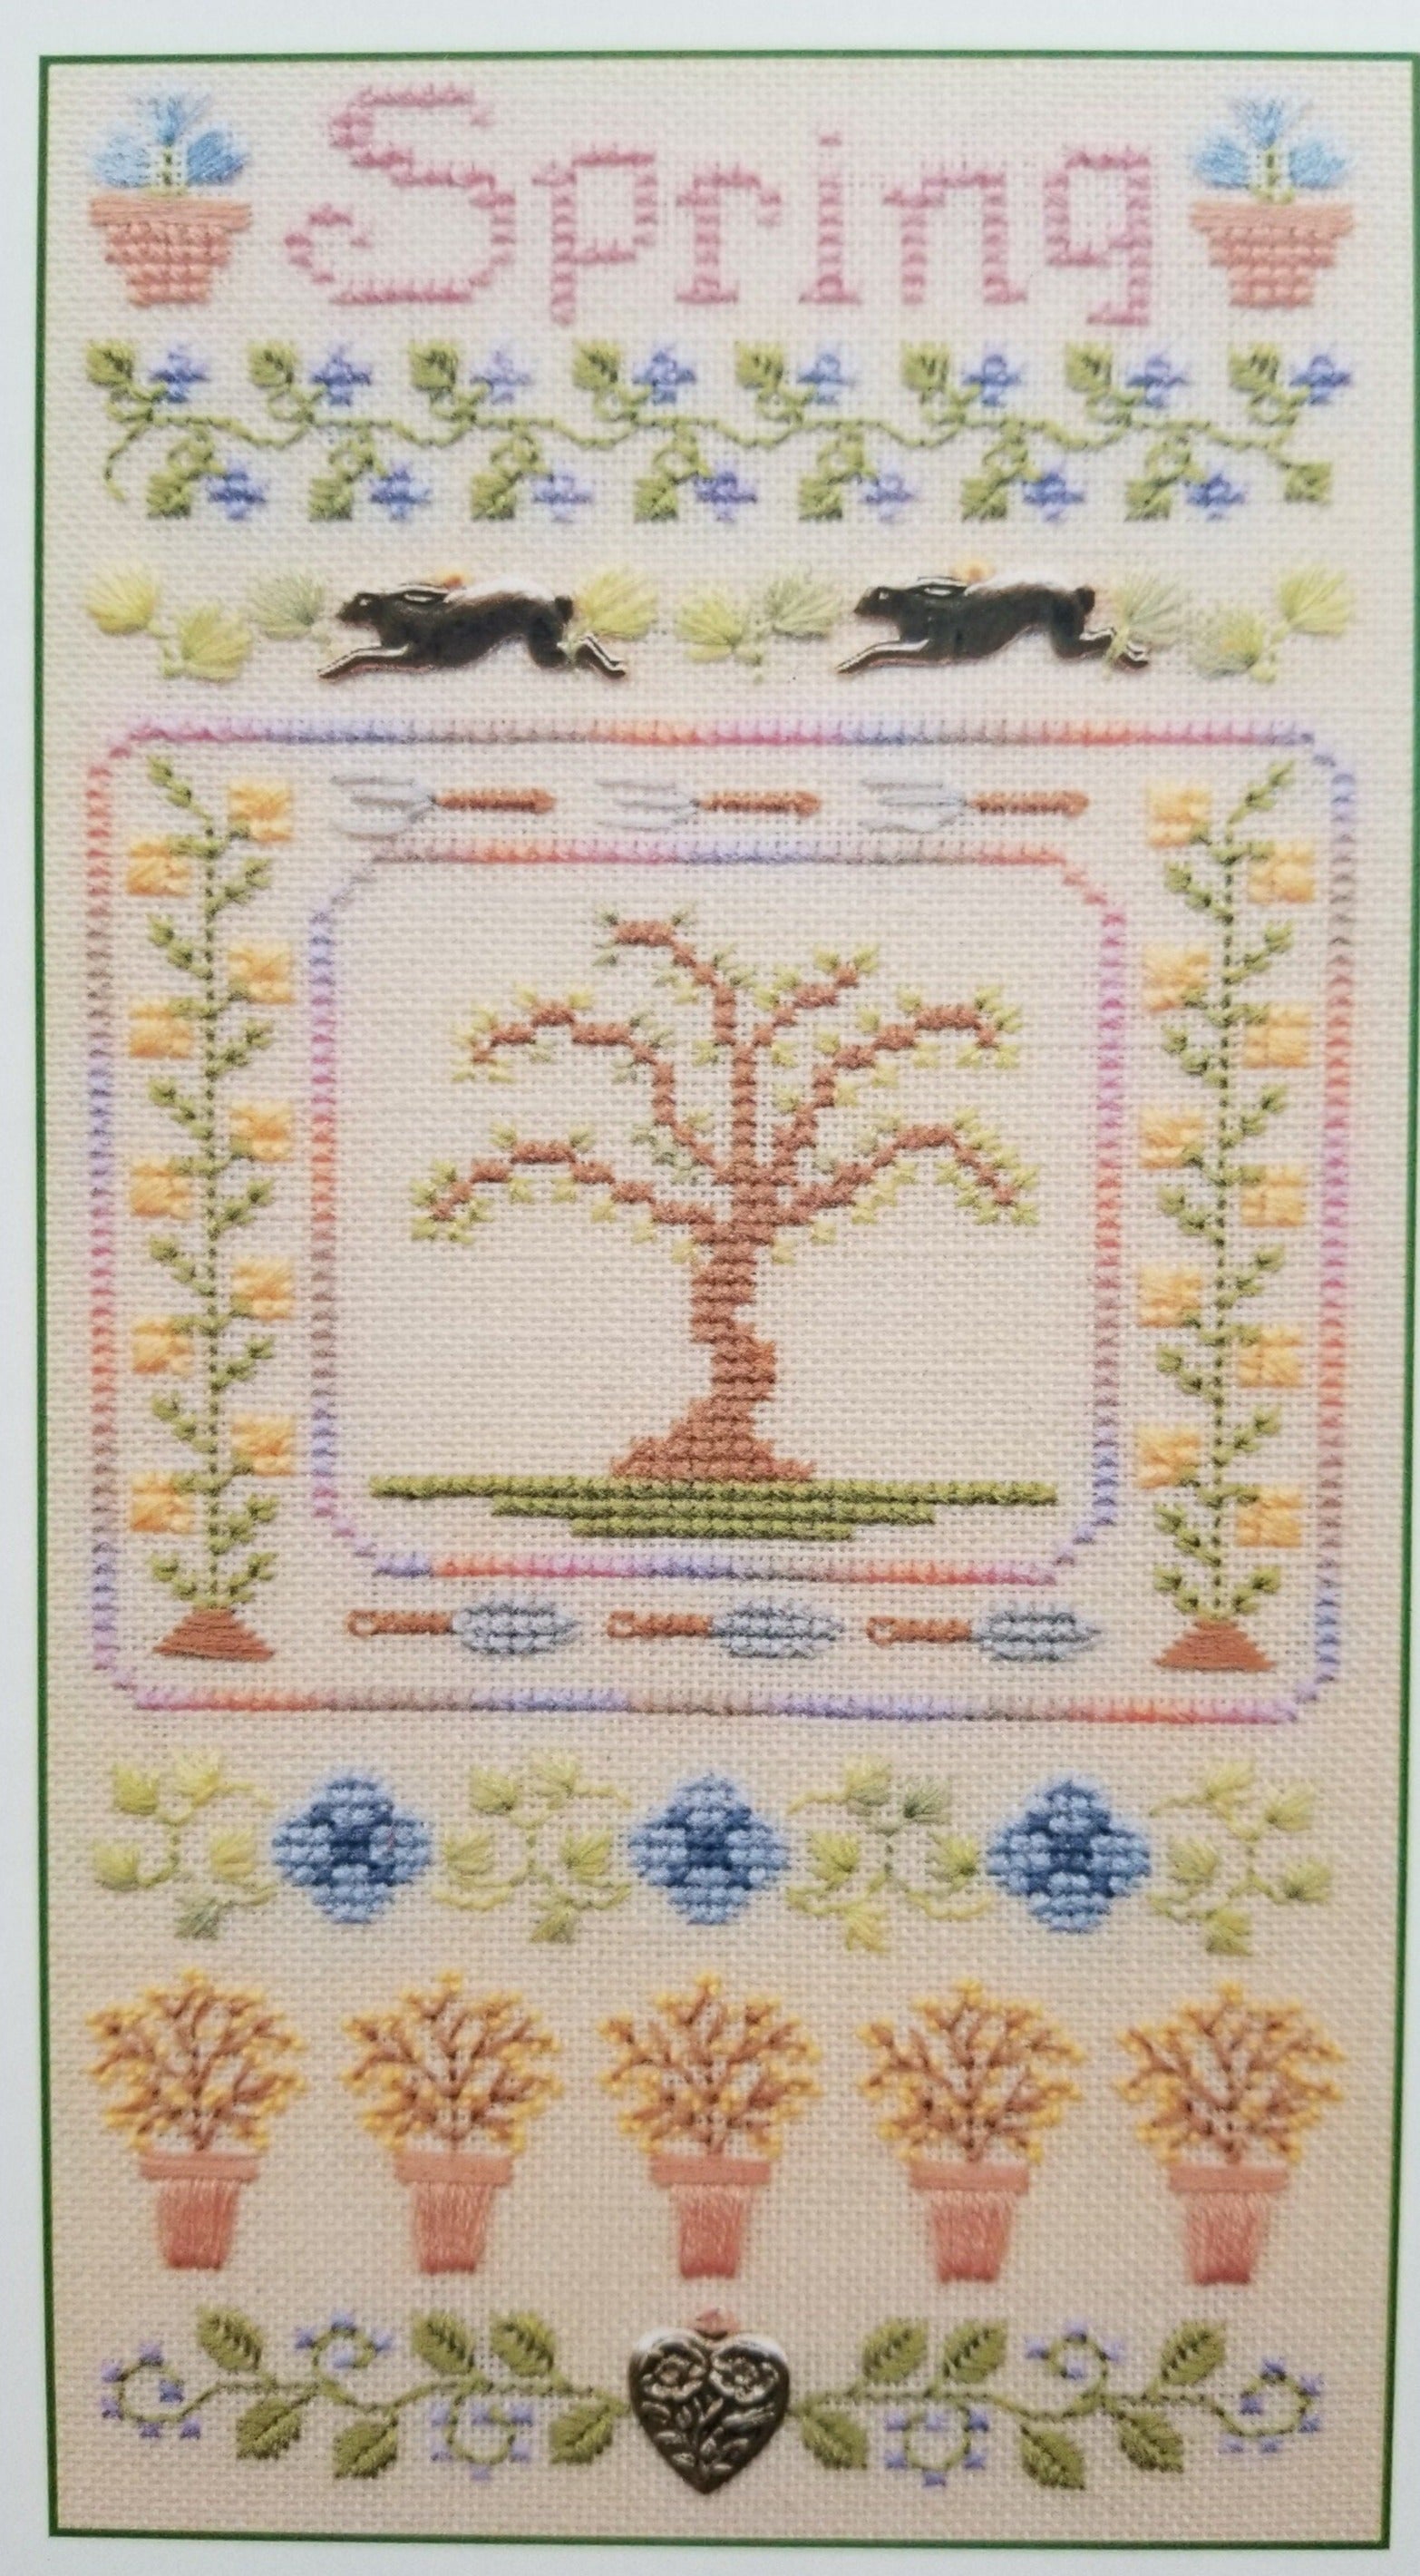 Elizabeth's Designs Spring cross stitch pattern